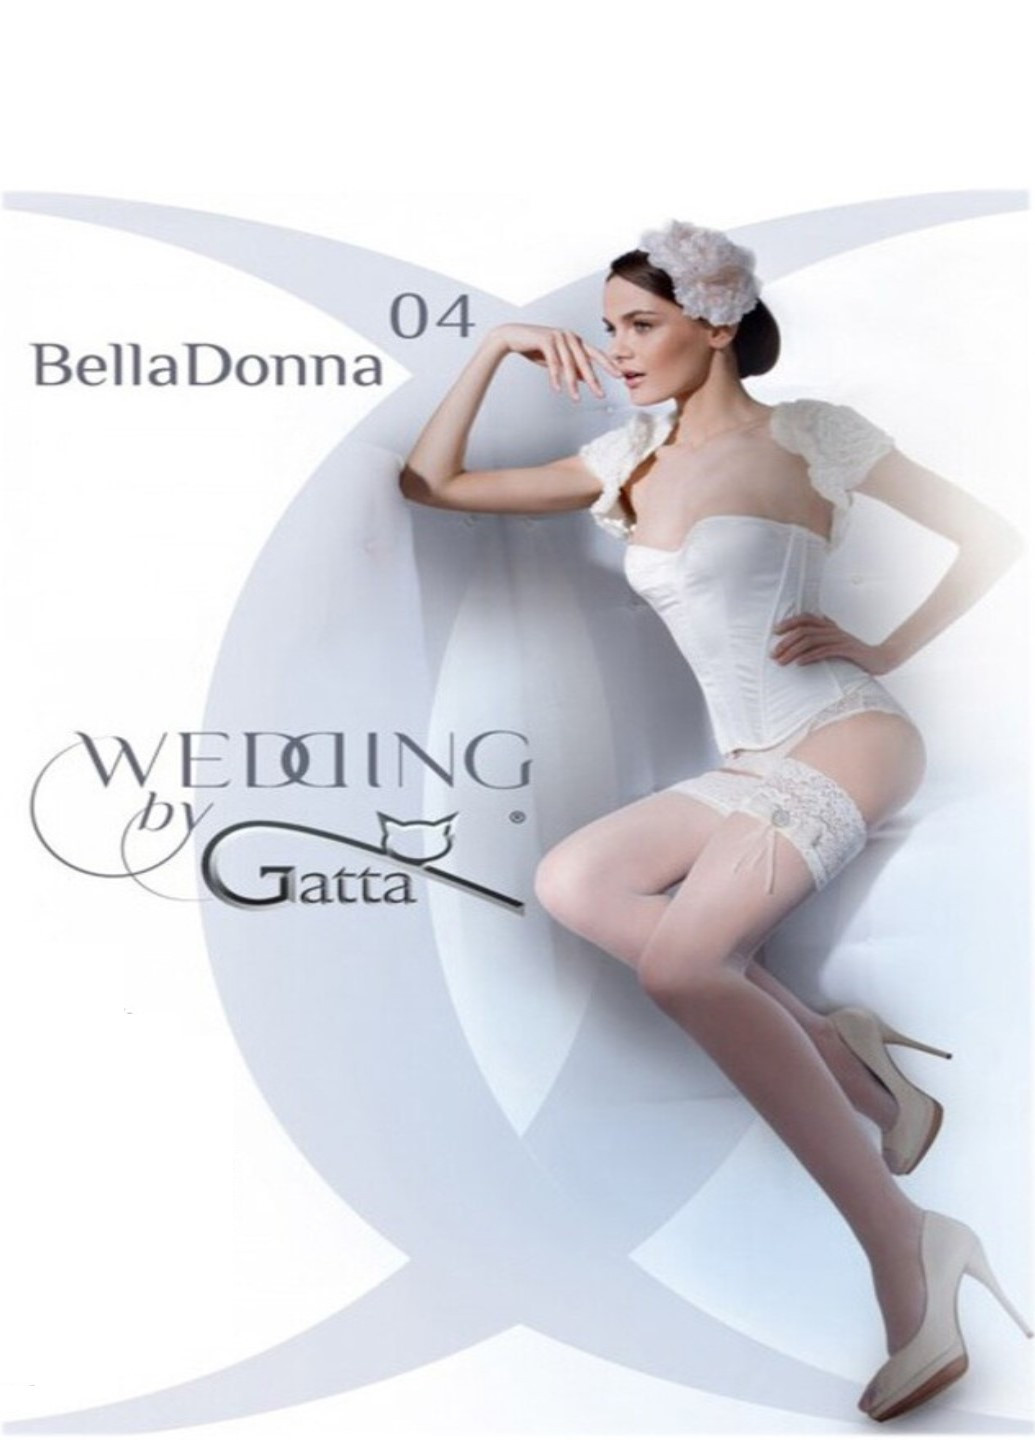 Панчохи жін.BELLADONNA з аплік./w.04/3-4/OFF WHITE Gatta belladonna 04 (206020202)